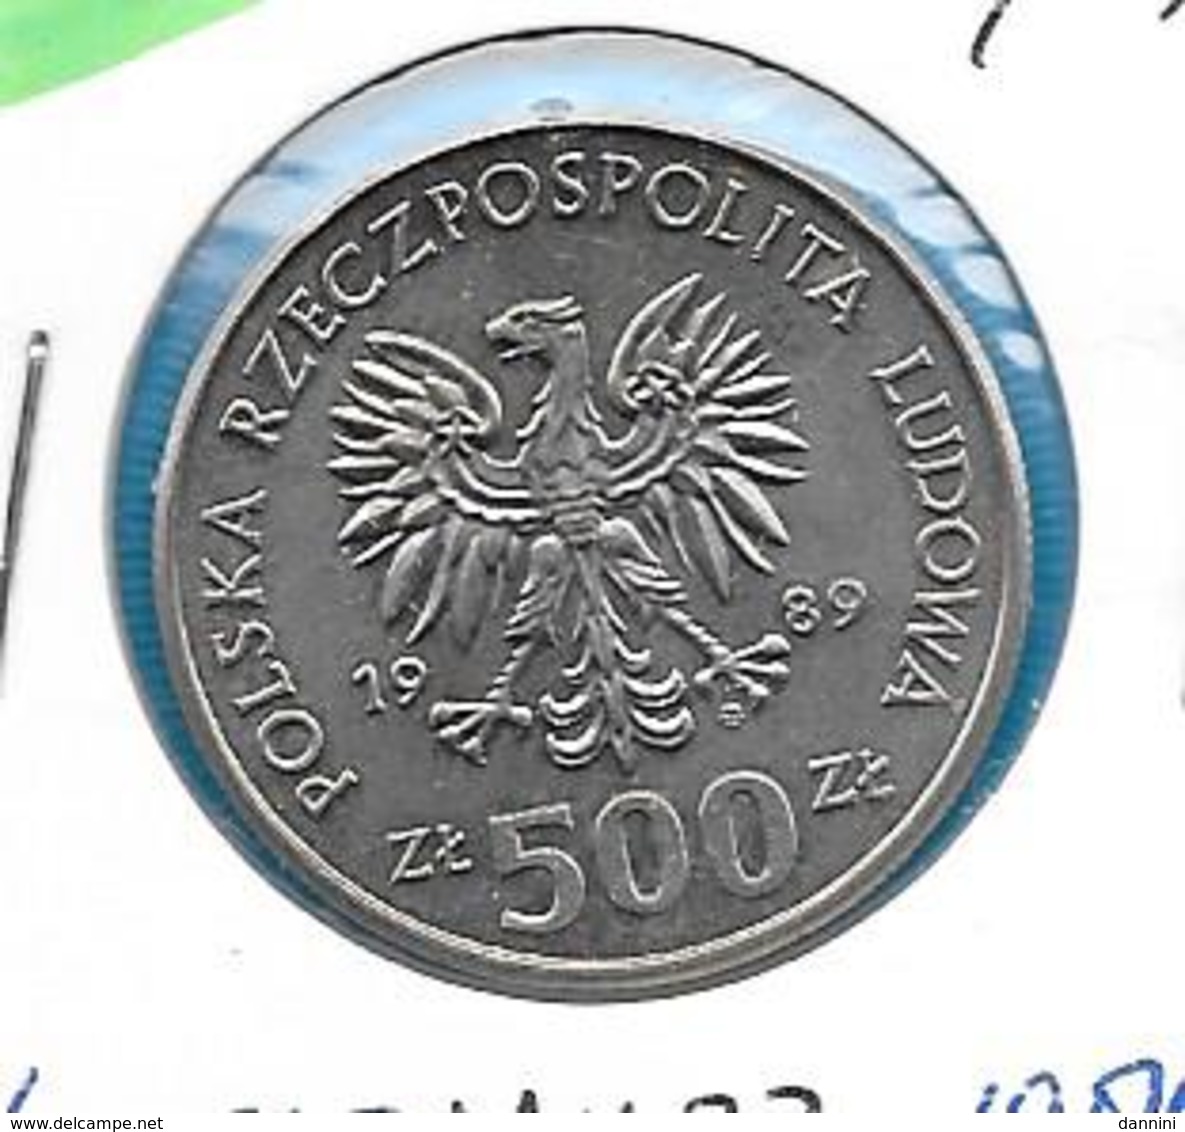 Polen 500 Zloty 1989 - KM 185 - Pologne